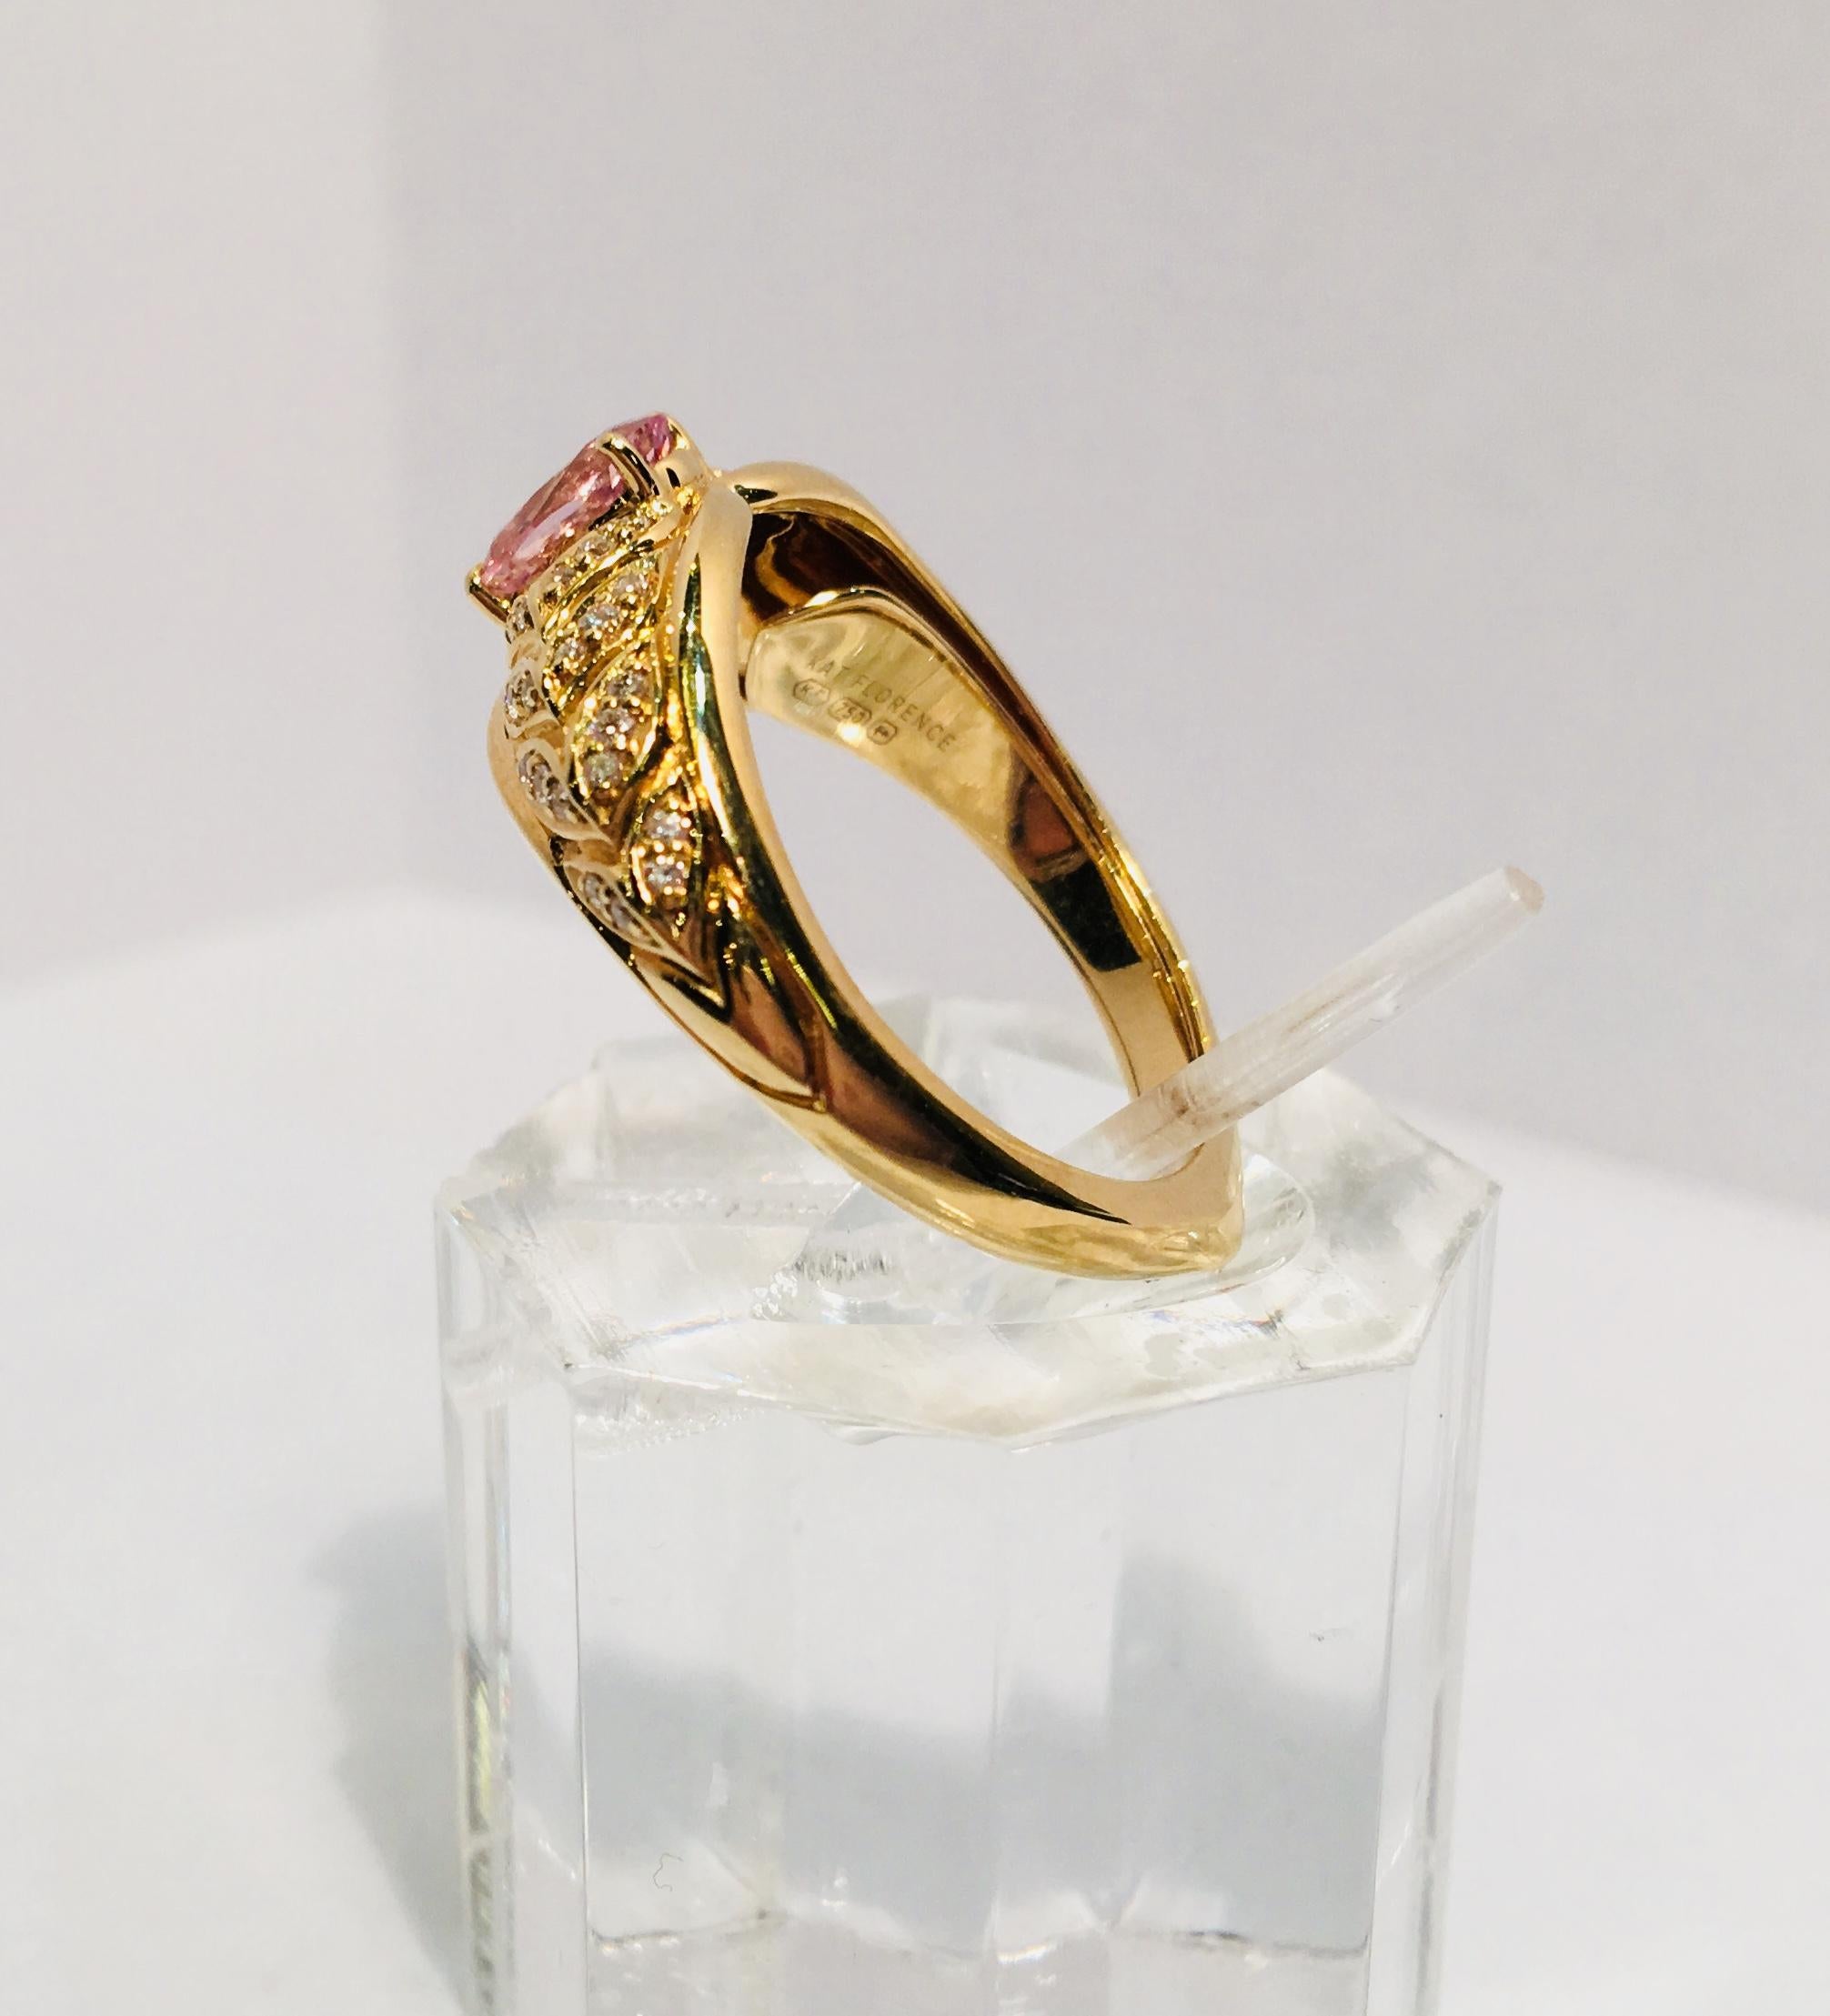 Oval Cut Kat Florence Pink Mogok Spinel D Flawless Diamonds 18 Karat Gold Designer Ring